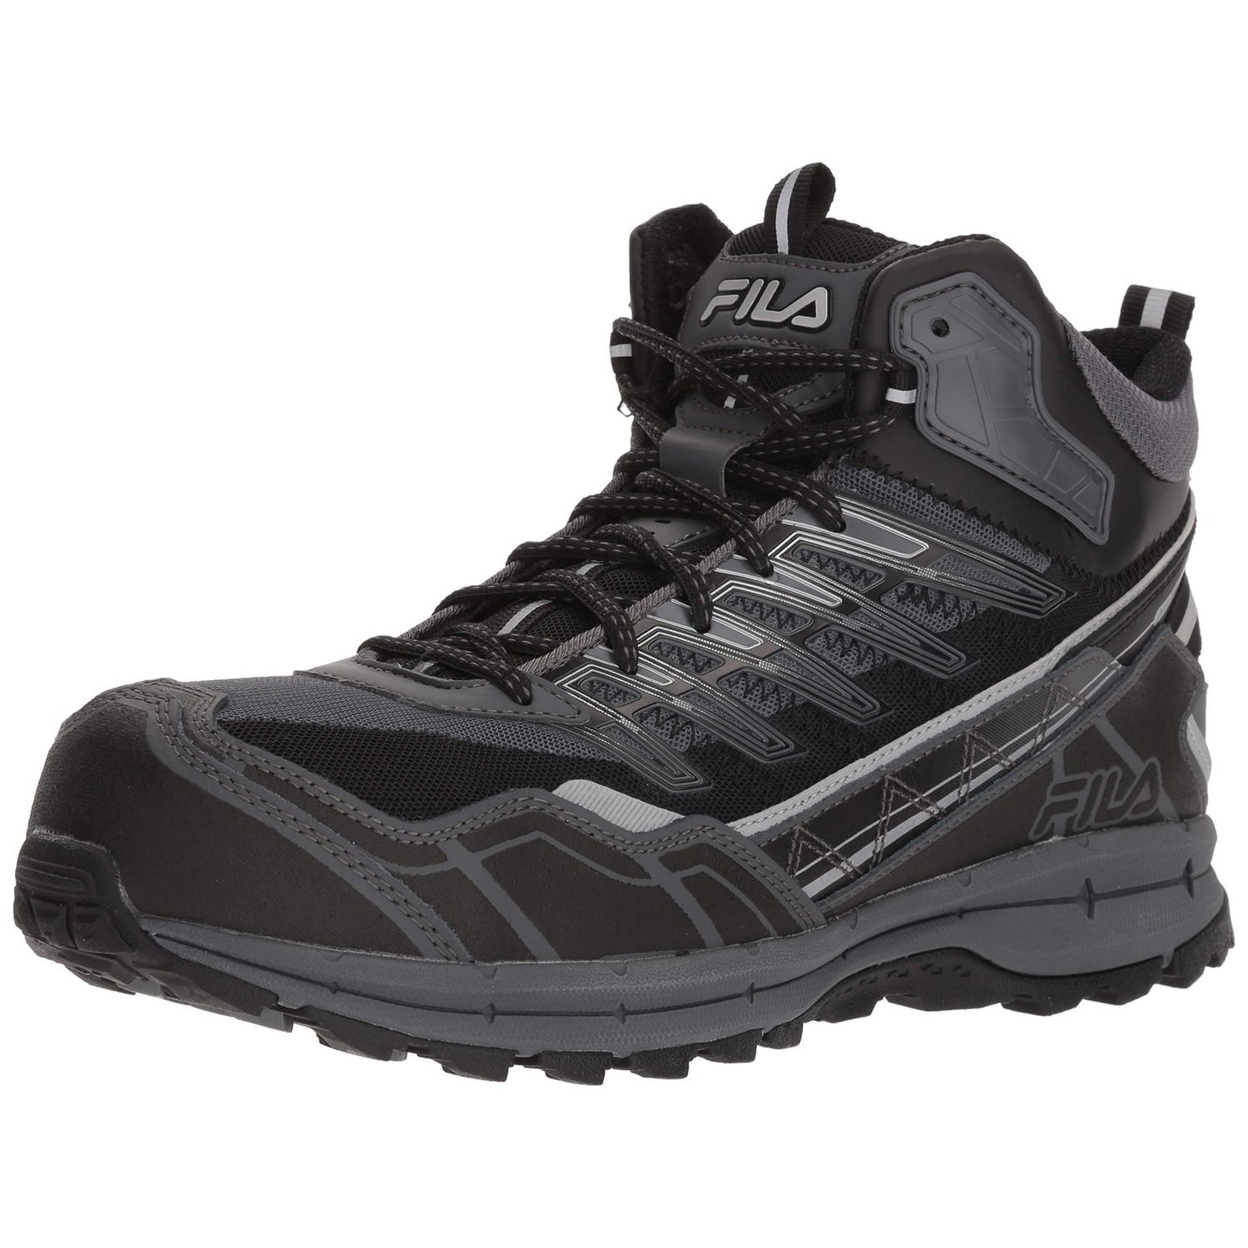 Fila Men's Hail Storm 3 Mid Composite Toe Trail Work Shoes Ct CSRK/BLK/MSIL - CSRK/BLK/MSIL, 11